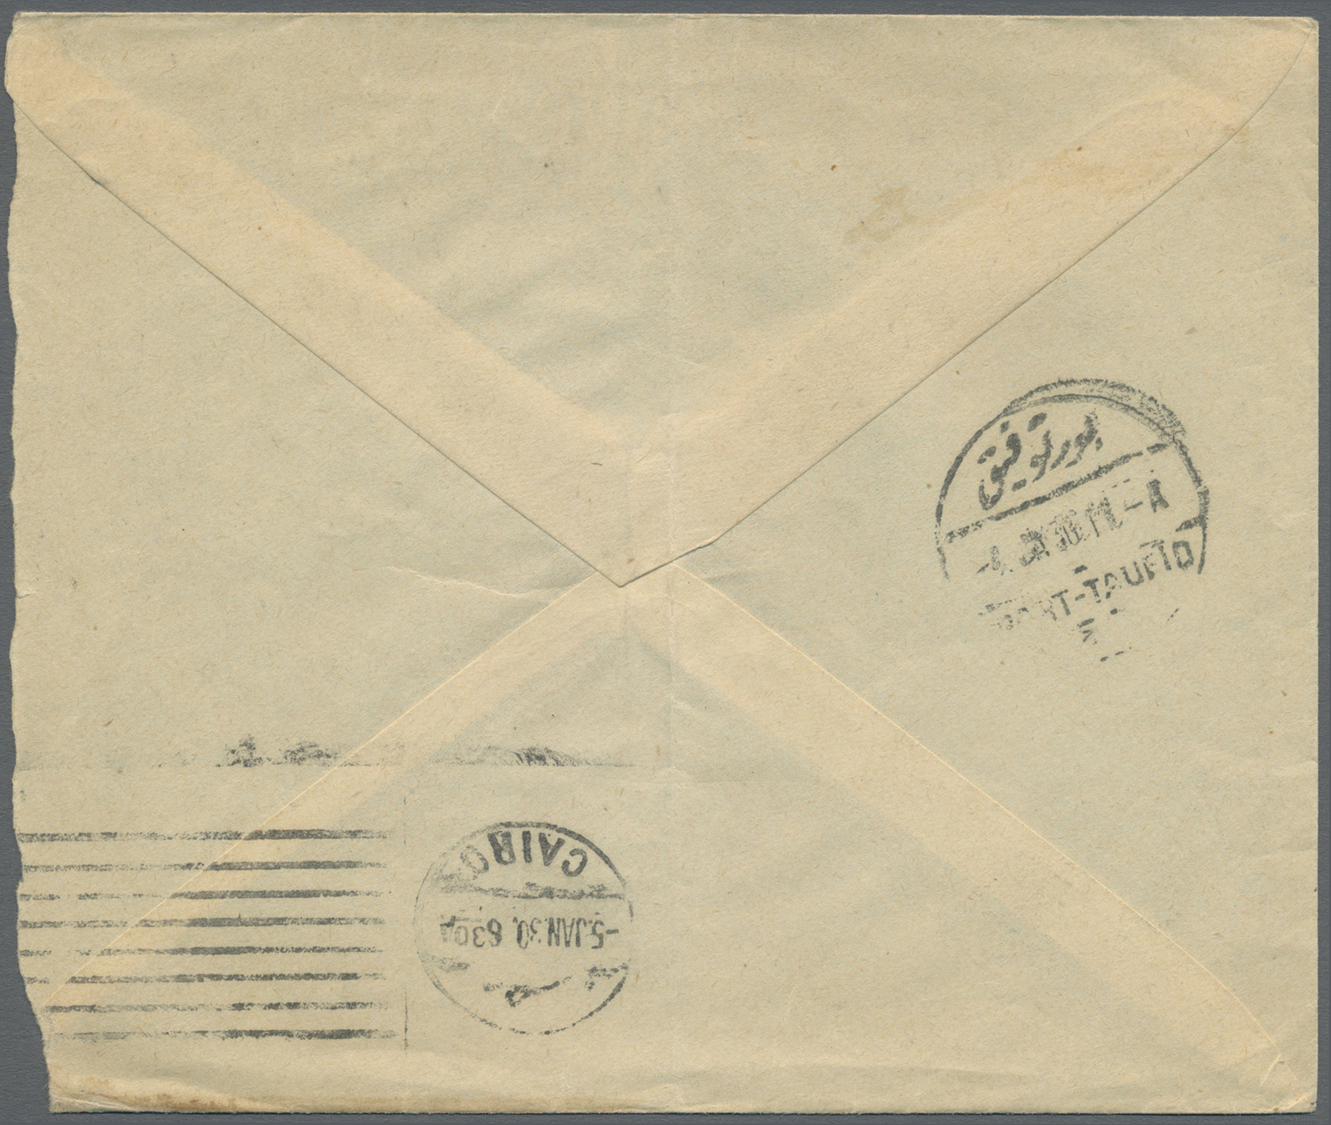 Br Saudi-Arabien: 1930. Envelope (faults) Addressed To Egypt Bearing SG 302, 1 3/4g Blue Tied By Djedda/3 Date Stamp Rou - Saudi Arabia